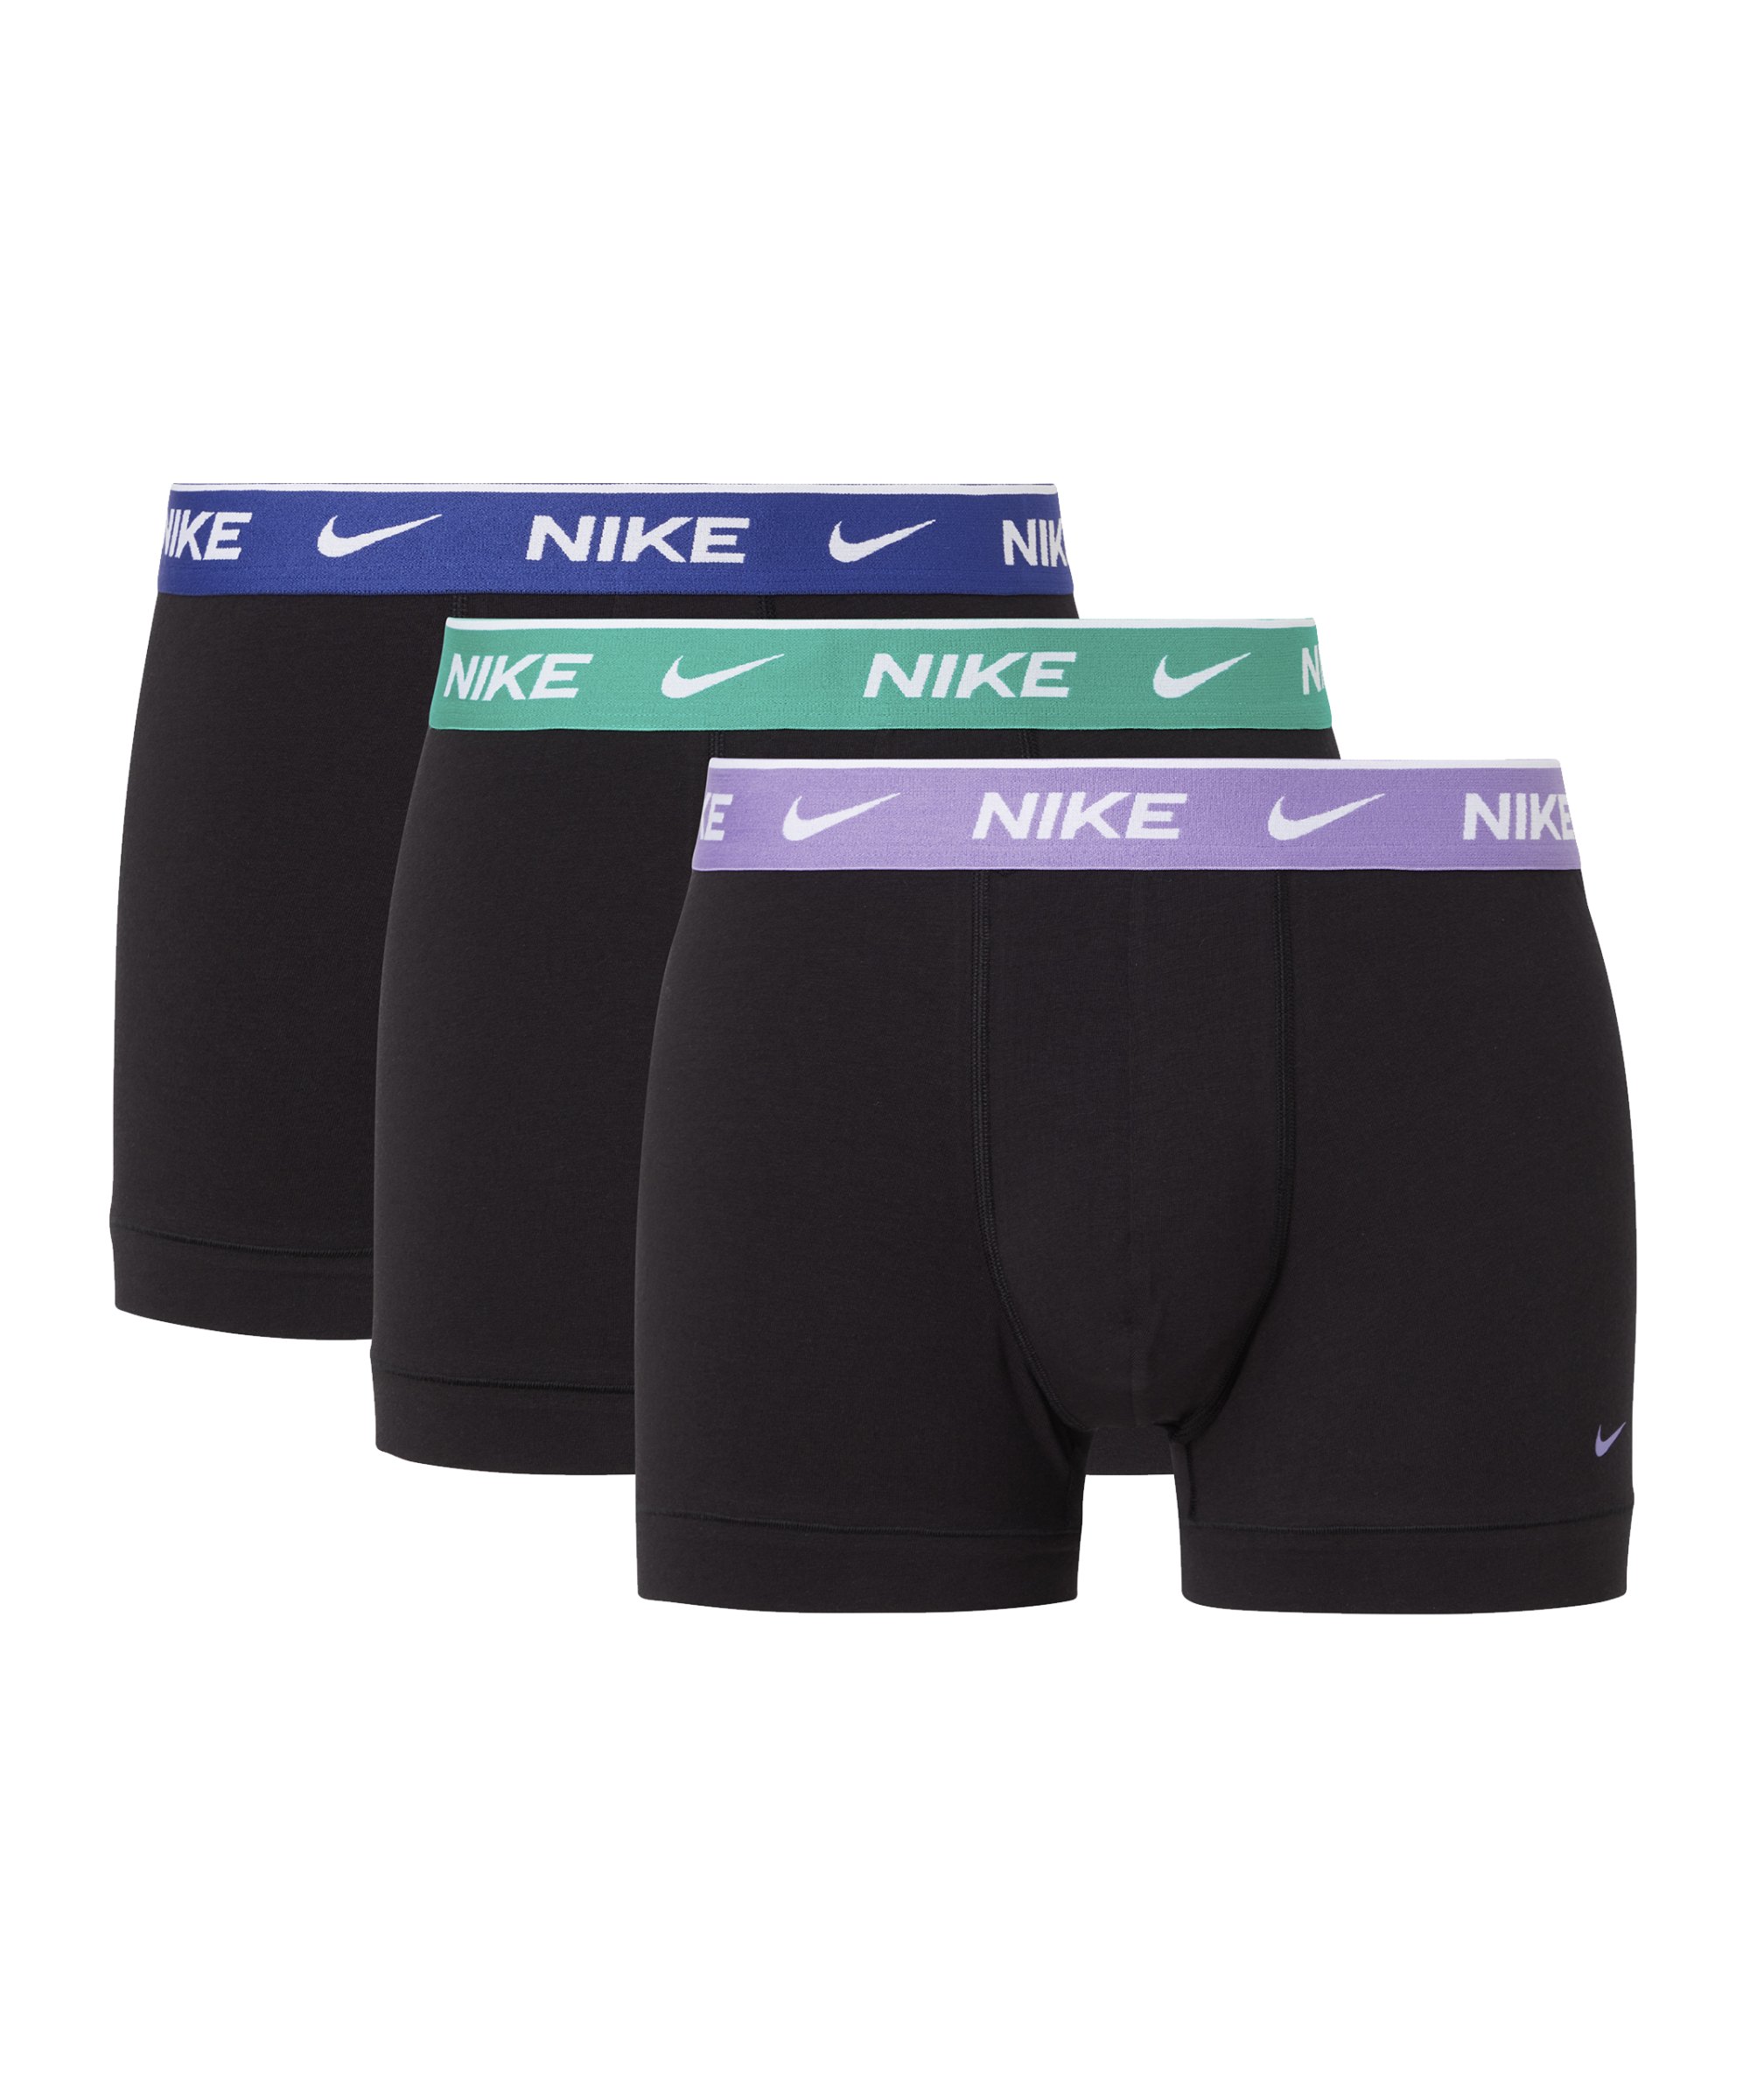 Nike Cotton Trunk Boxershort 3er Pack Schwarz FAN6 - schwarz